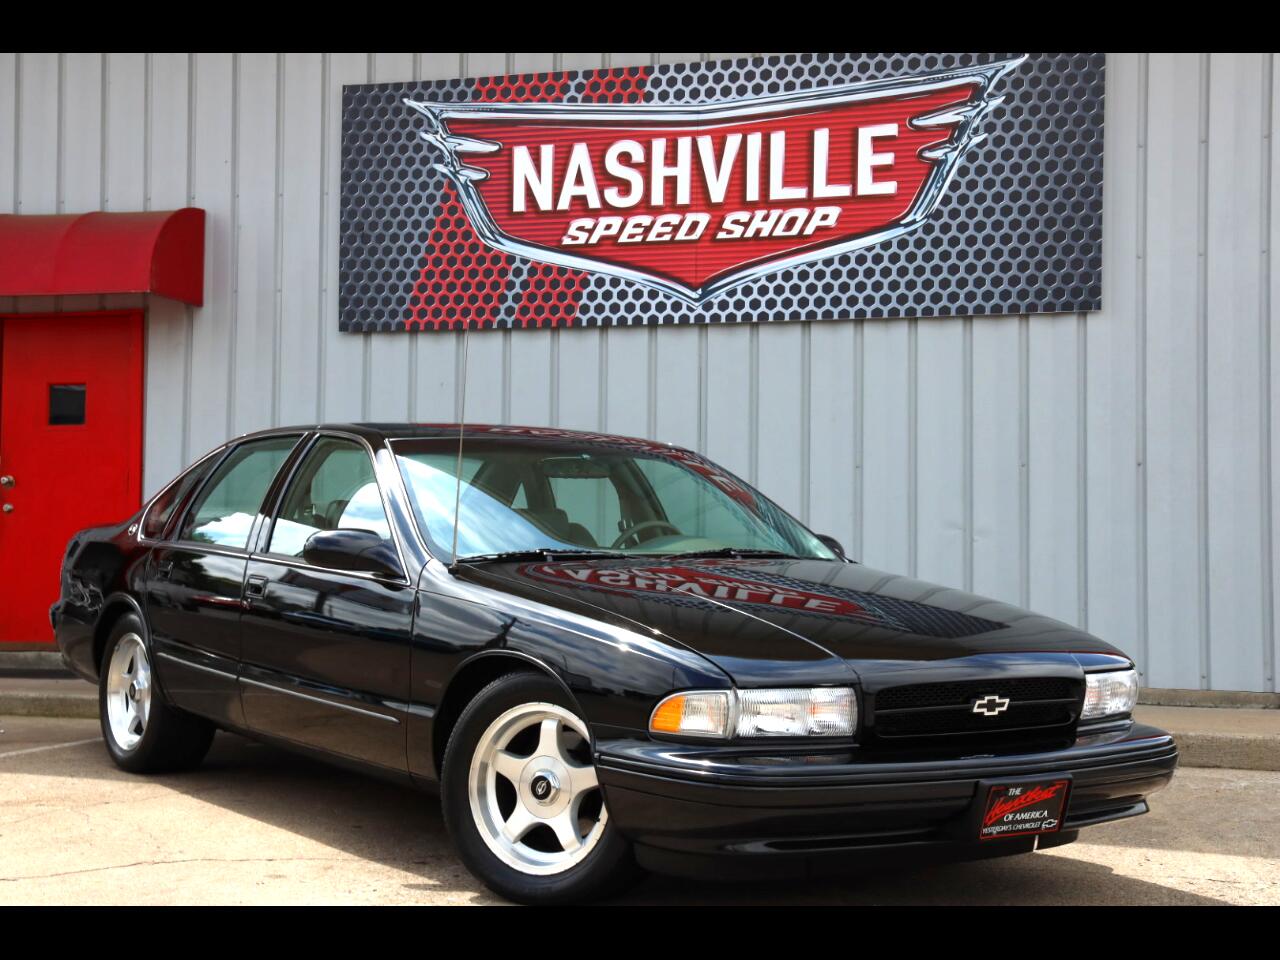 Chevrolet Caprice Classic/Impala SS 4dr Sedan 1995